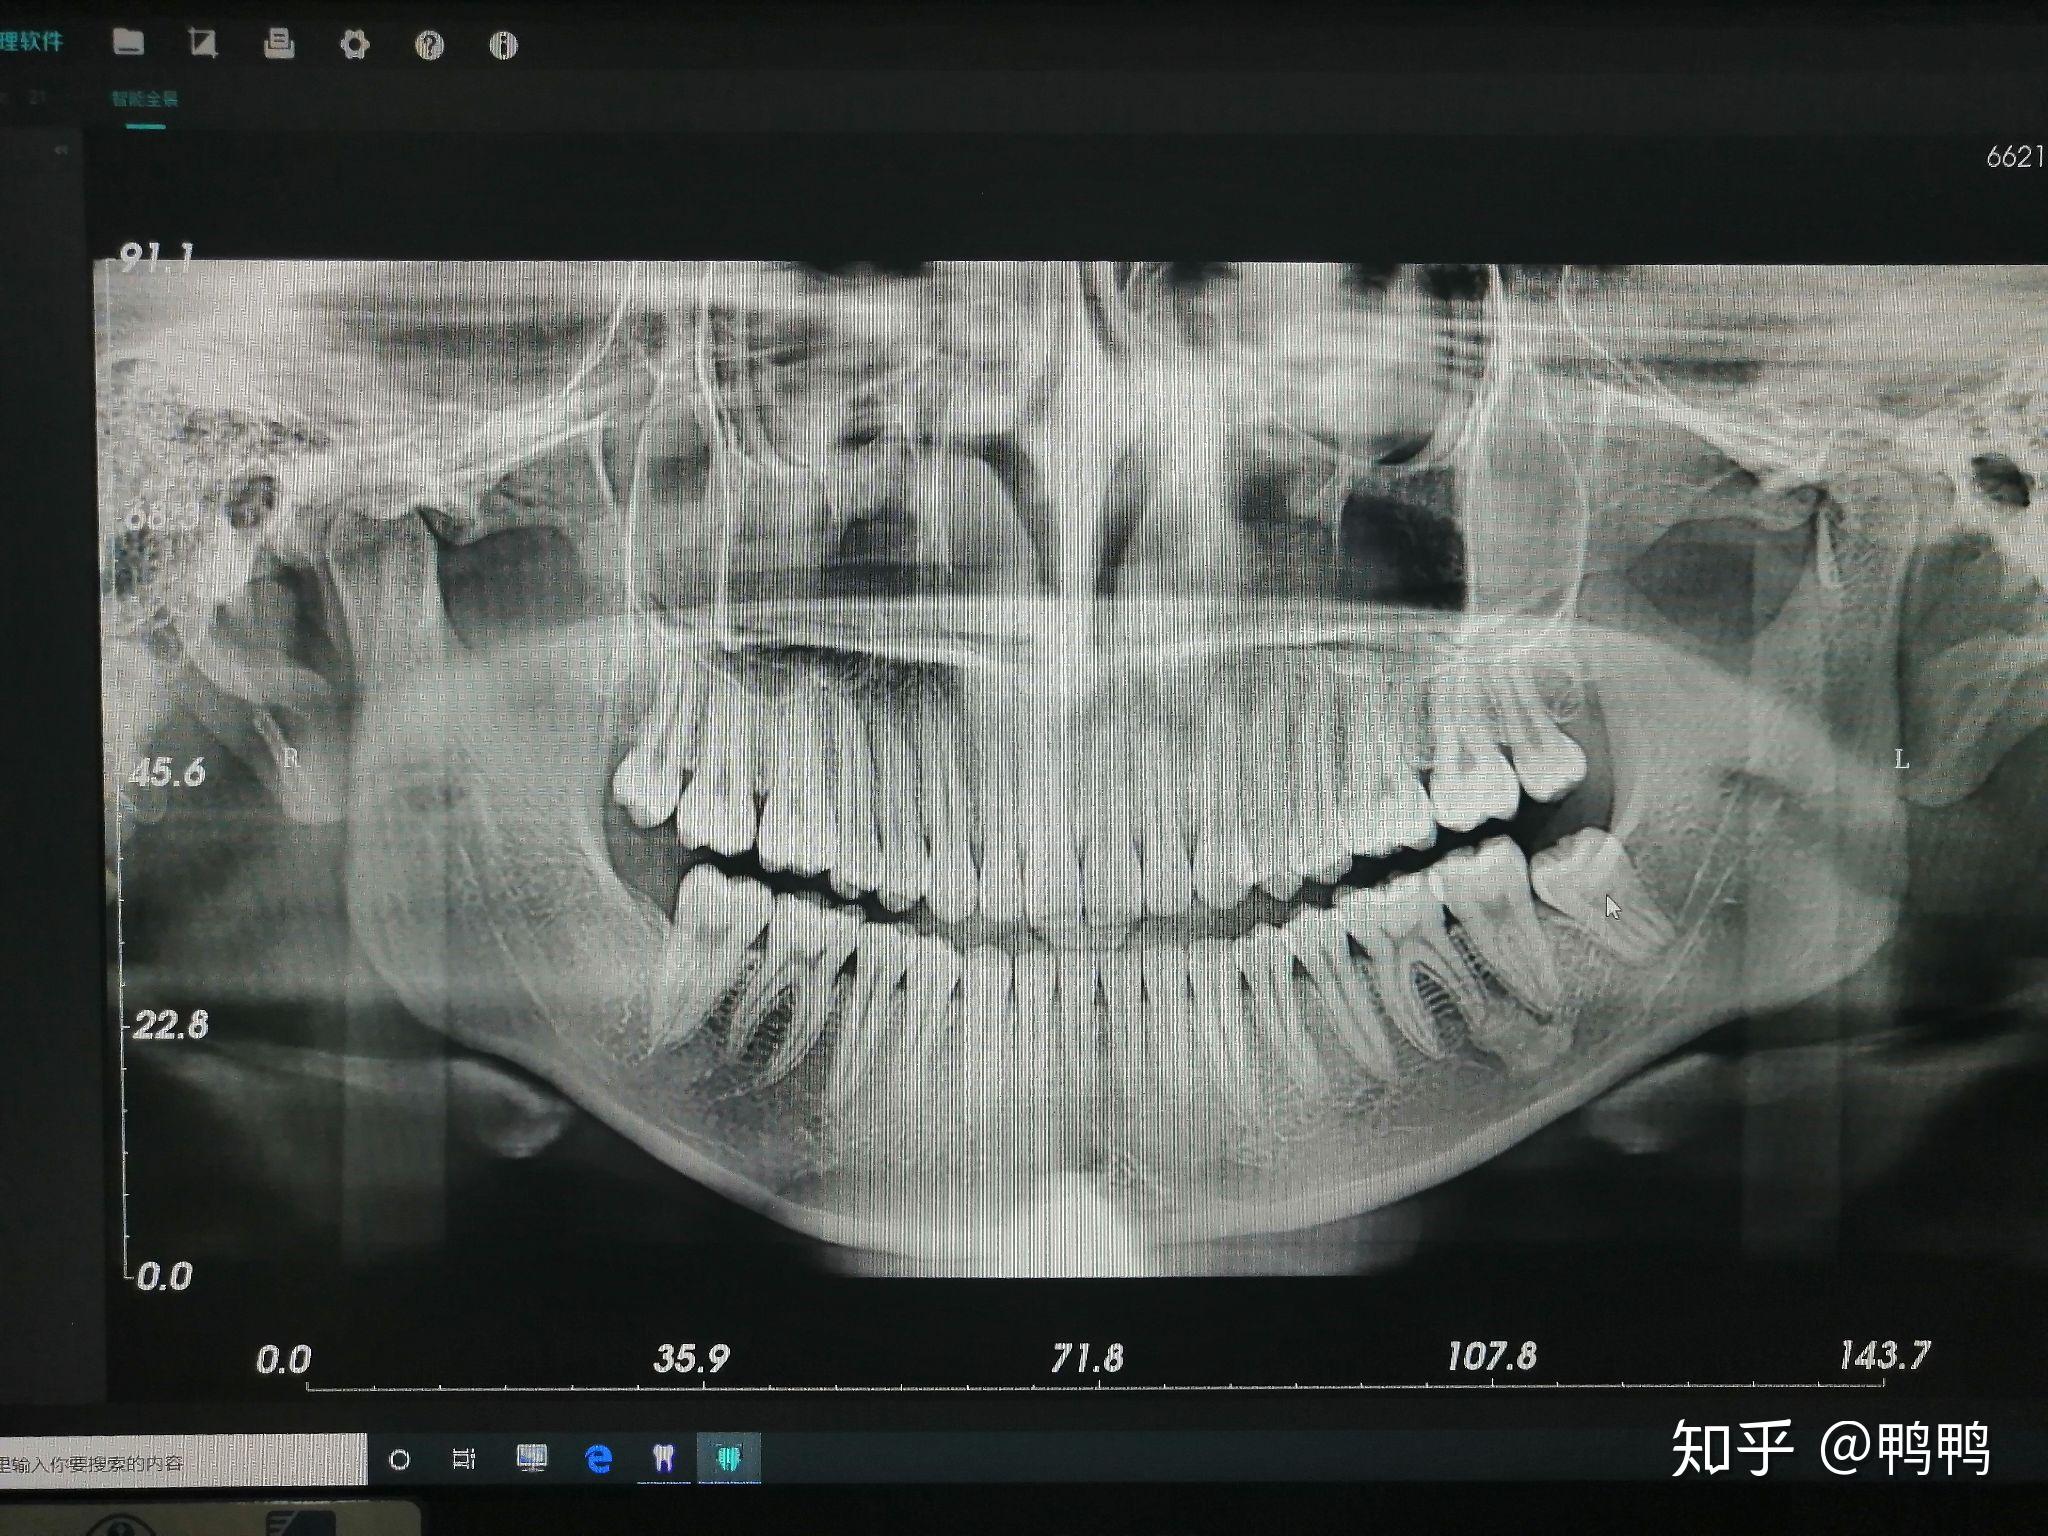 hpv口腔早期症状图片,感染hpv舌头两侧图 - 伤感说说吧